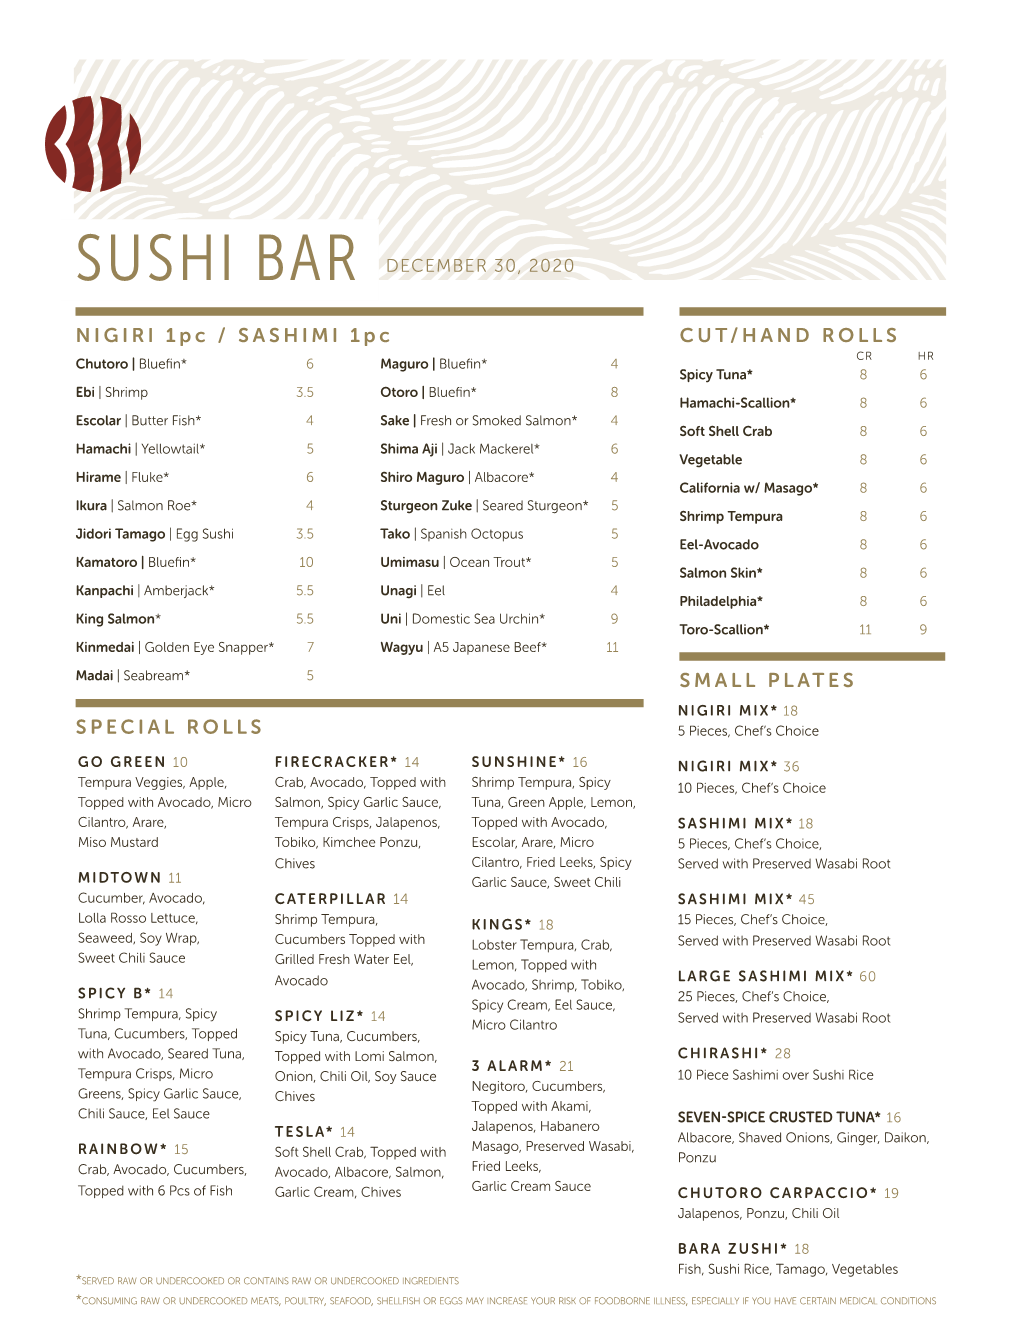 Sushi Bar December 30, 2020